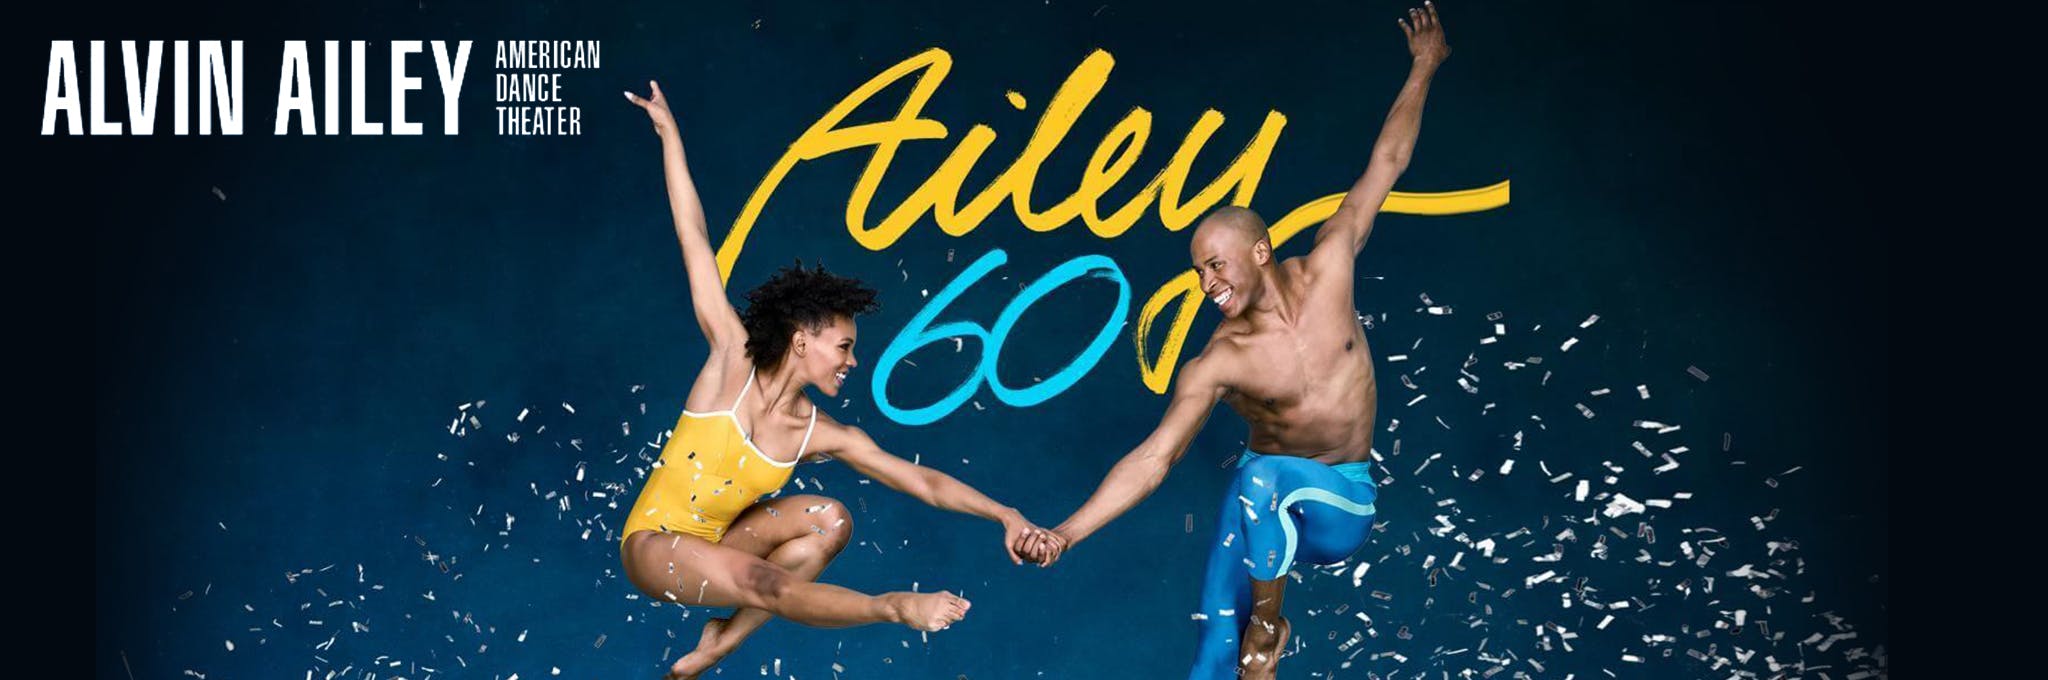 Alvin Ailey American Dance Theater Rush Tickets New York TodayTix